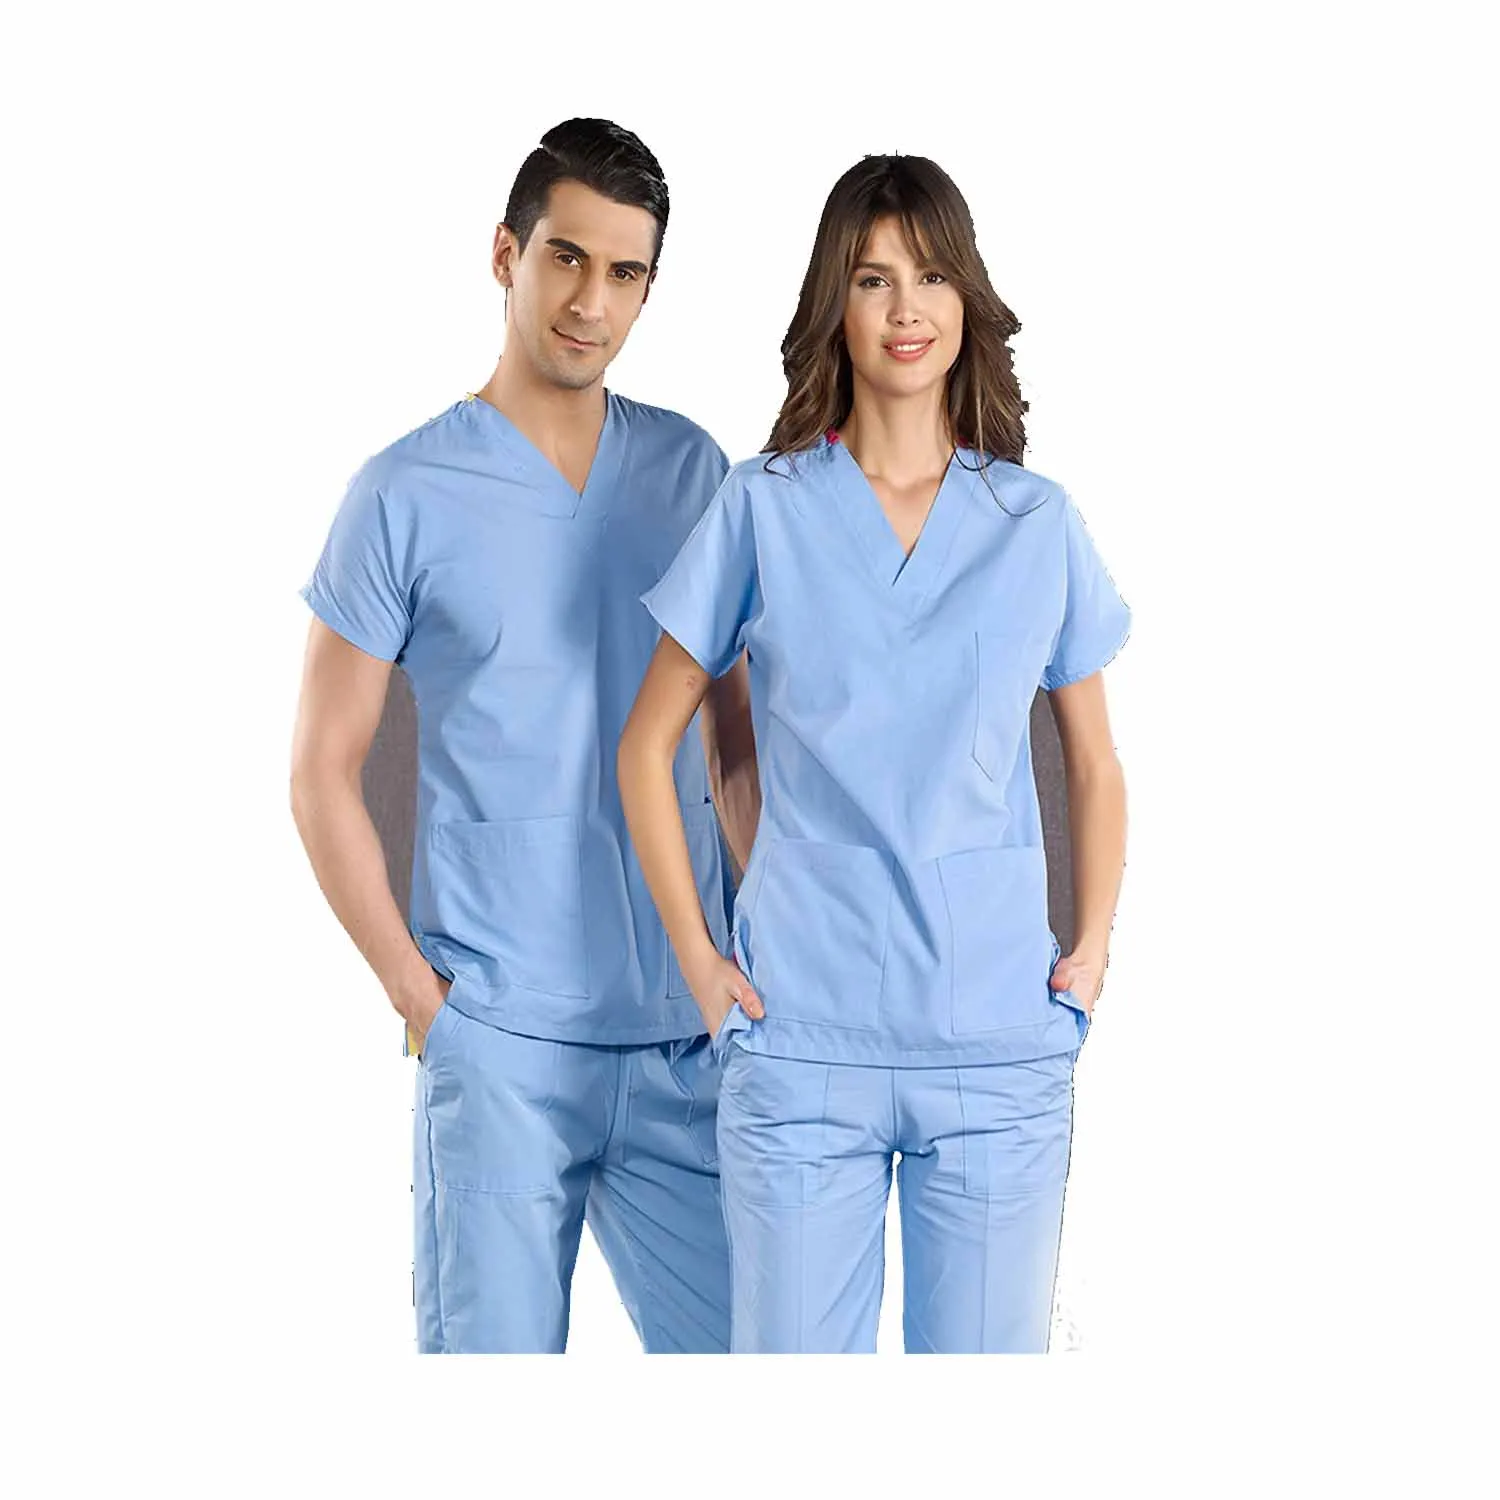 Unisex New Doctors Customized Medical Hospital Scrub Uniforms Medical Fashionable Custom Uniforms For Hospital Style uniform